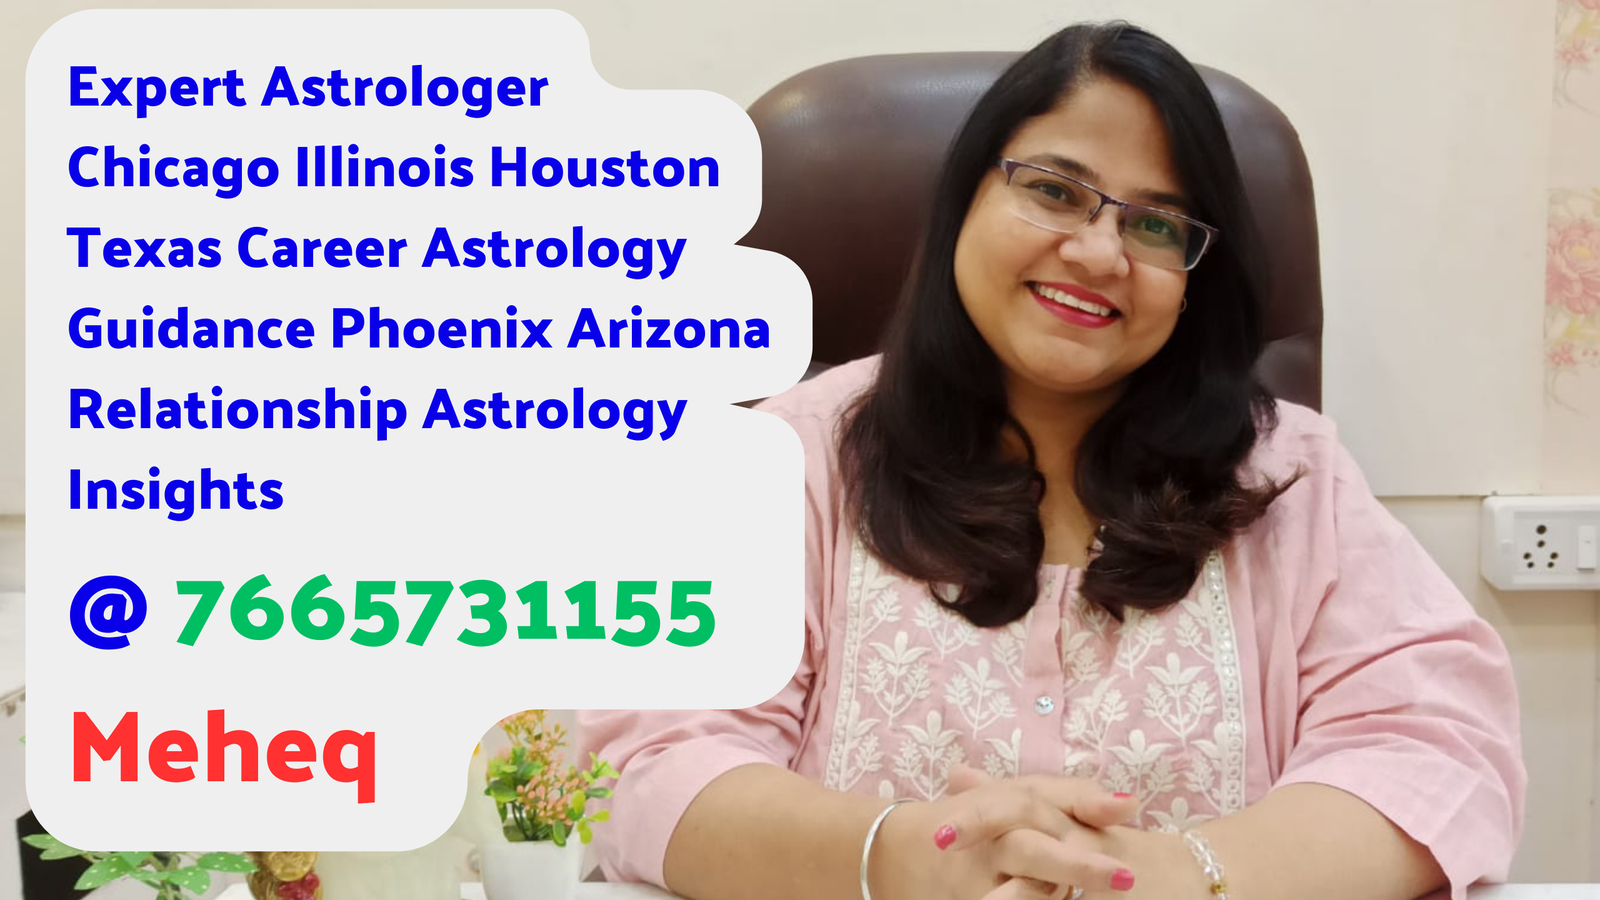 Expert Astrologer Chicago Illinois Houston Texas Career Astrology Guidance Phoenix Arizona Relationship Astrology Insights